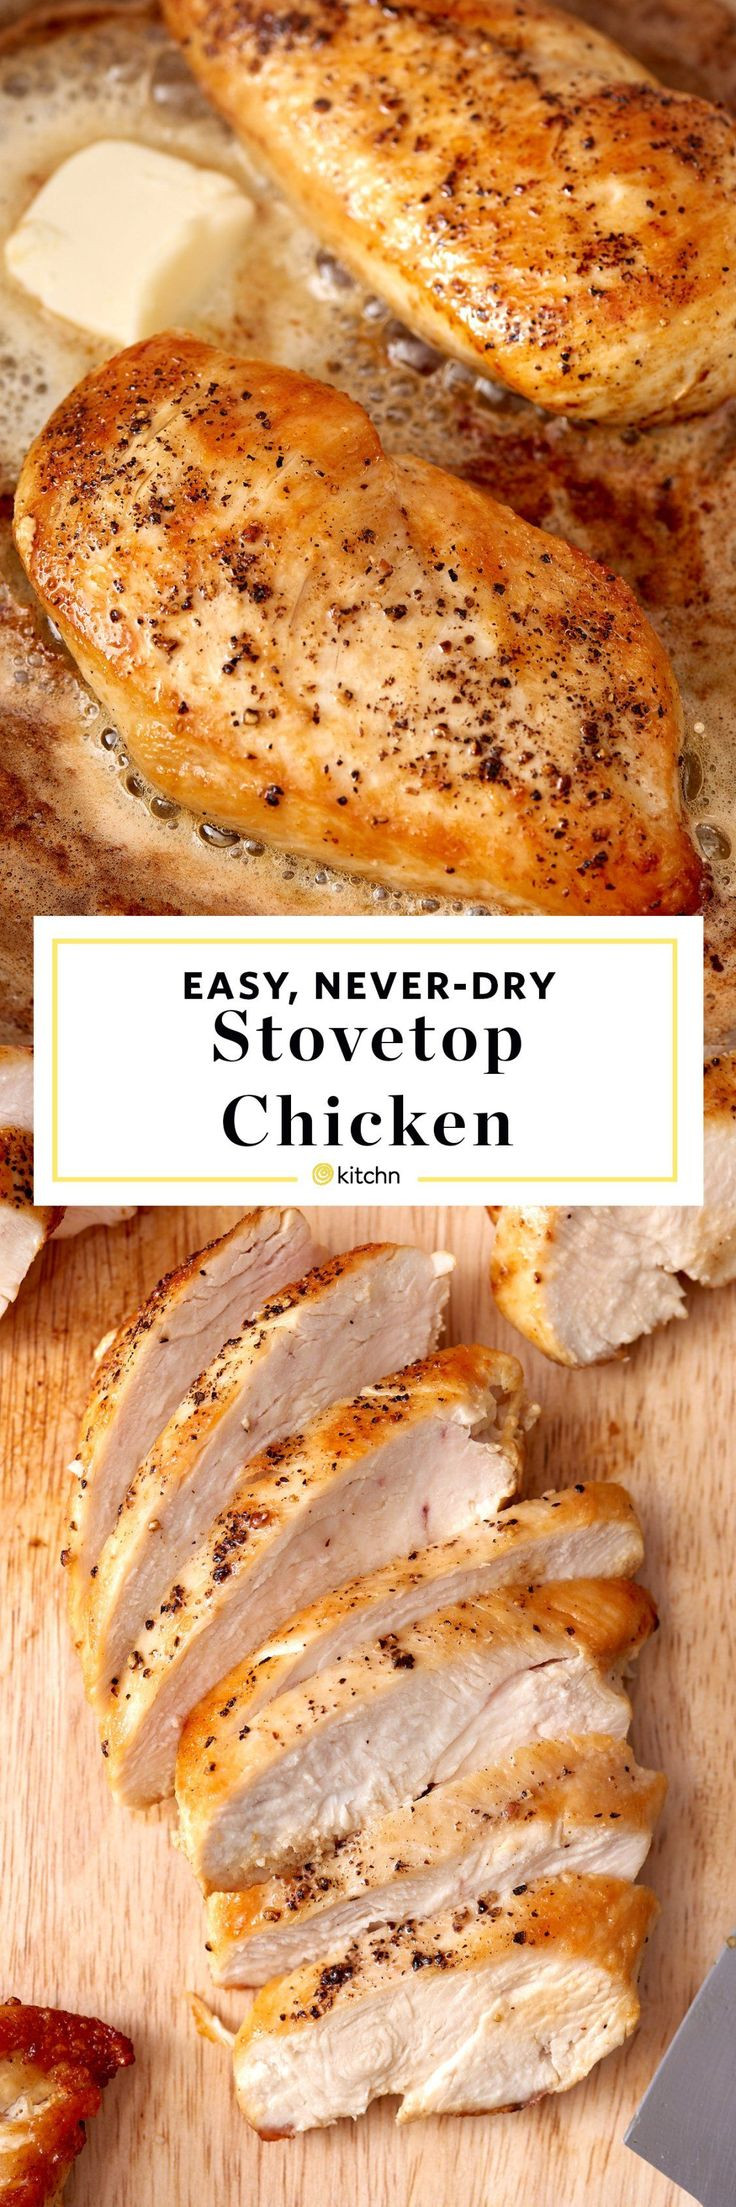 Healthy Chicken Breast Dinner
 Best 25 Healthy dinner recipes ideas on Pinterest